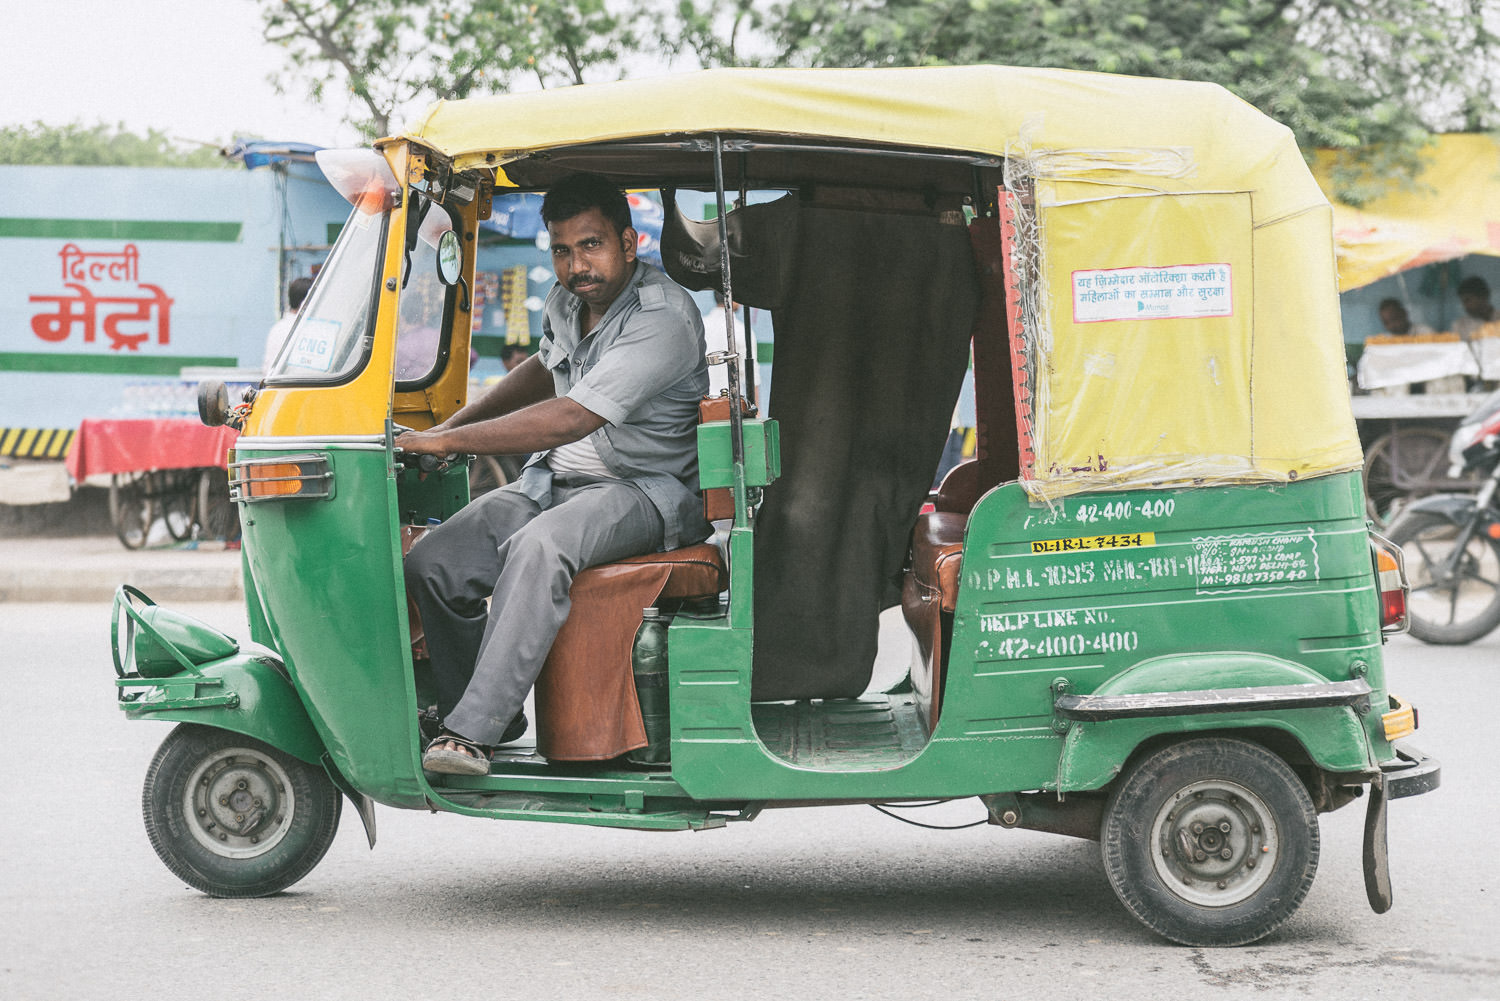 Lotus Temple Driver - Asia, Delhi, India, rickshaw, road, street, taxi, traffic, travel